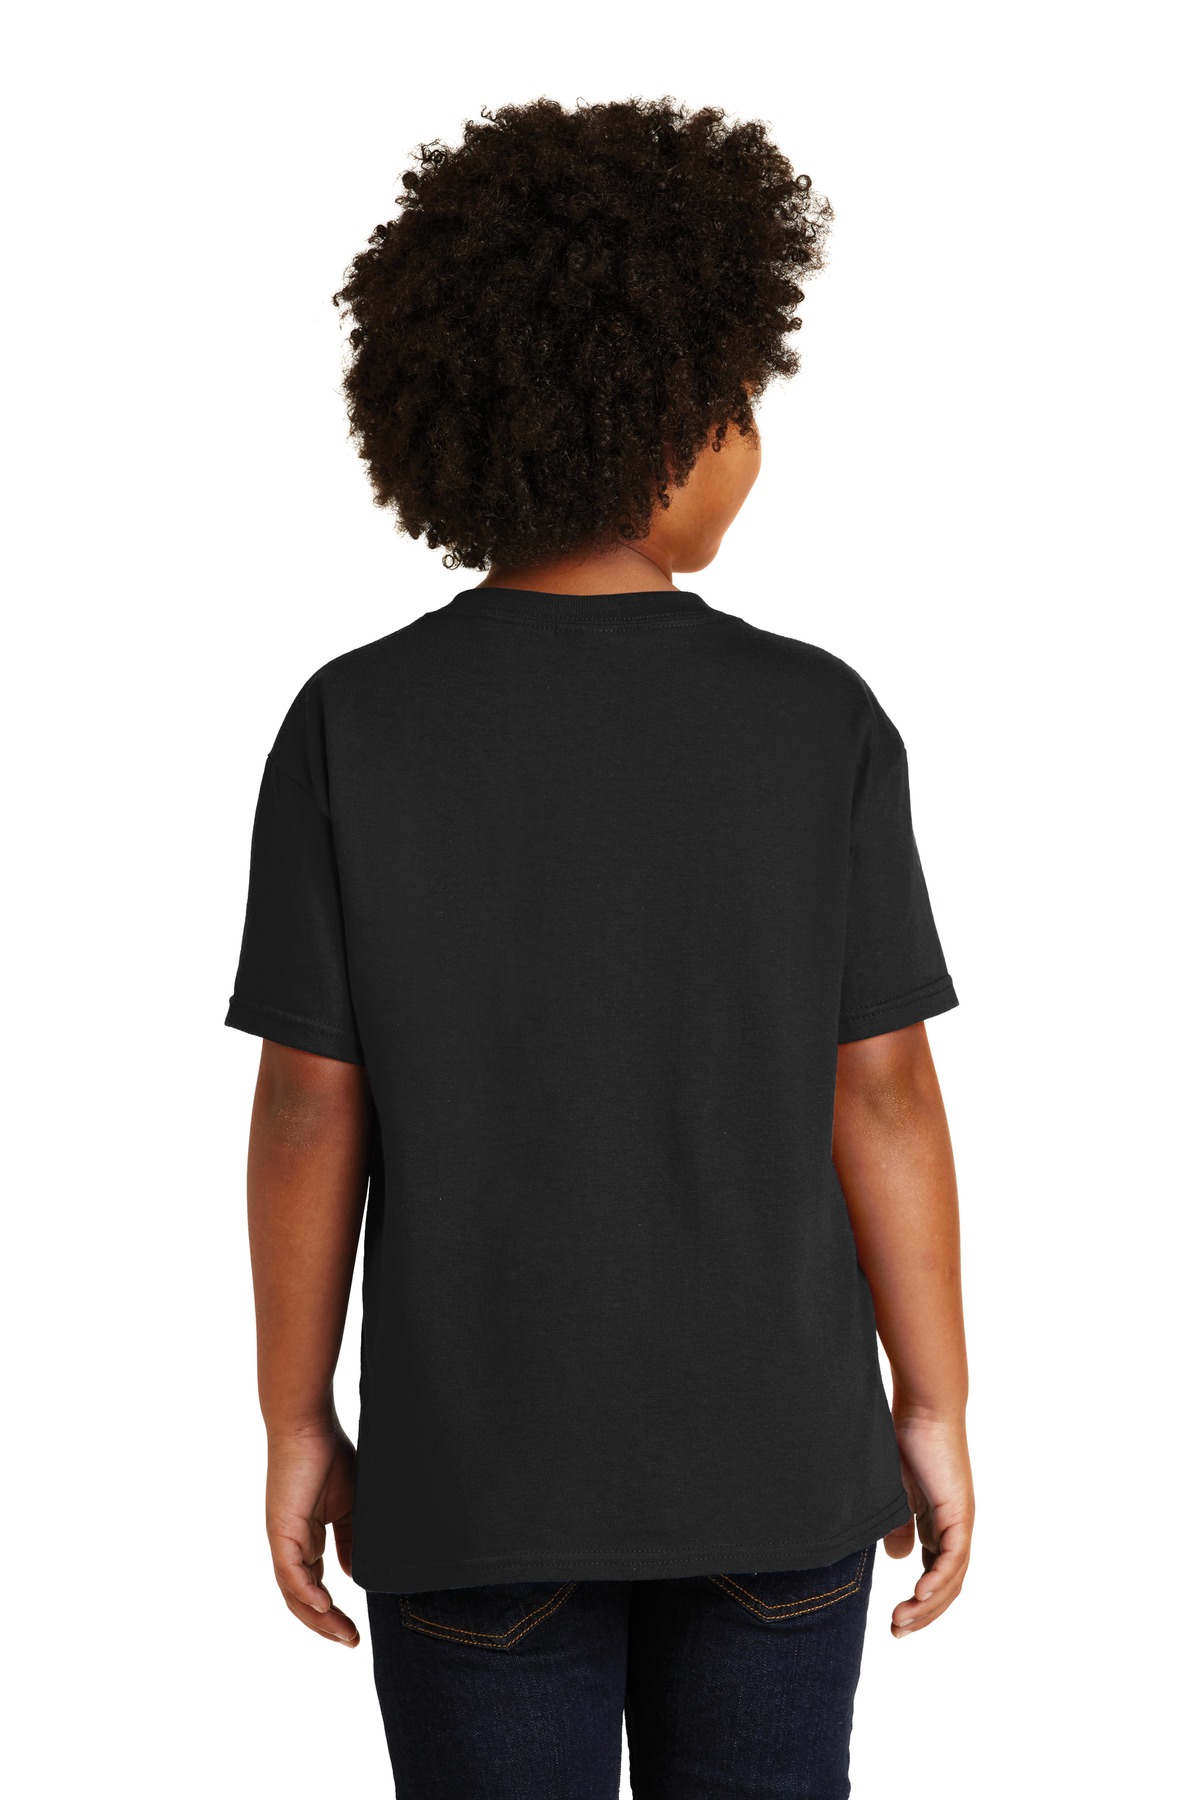 Artix - Big Boys T-Shirts and Tank Tops, up to Big Boys Size 24 - San Francisco - image 3 of 5